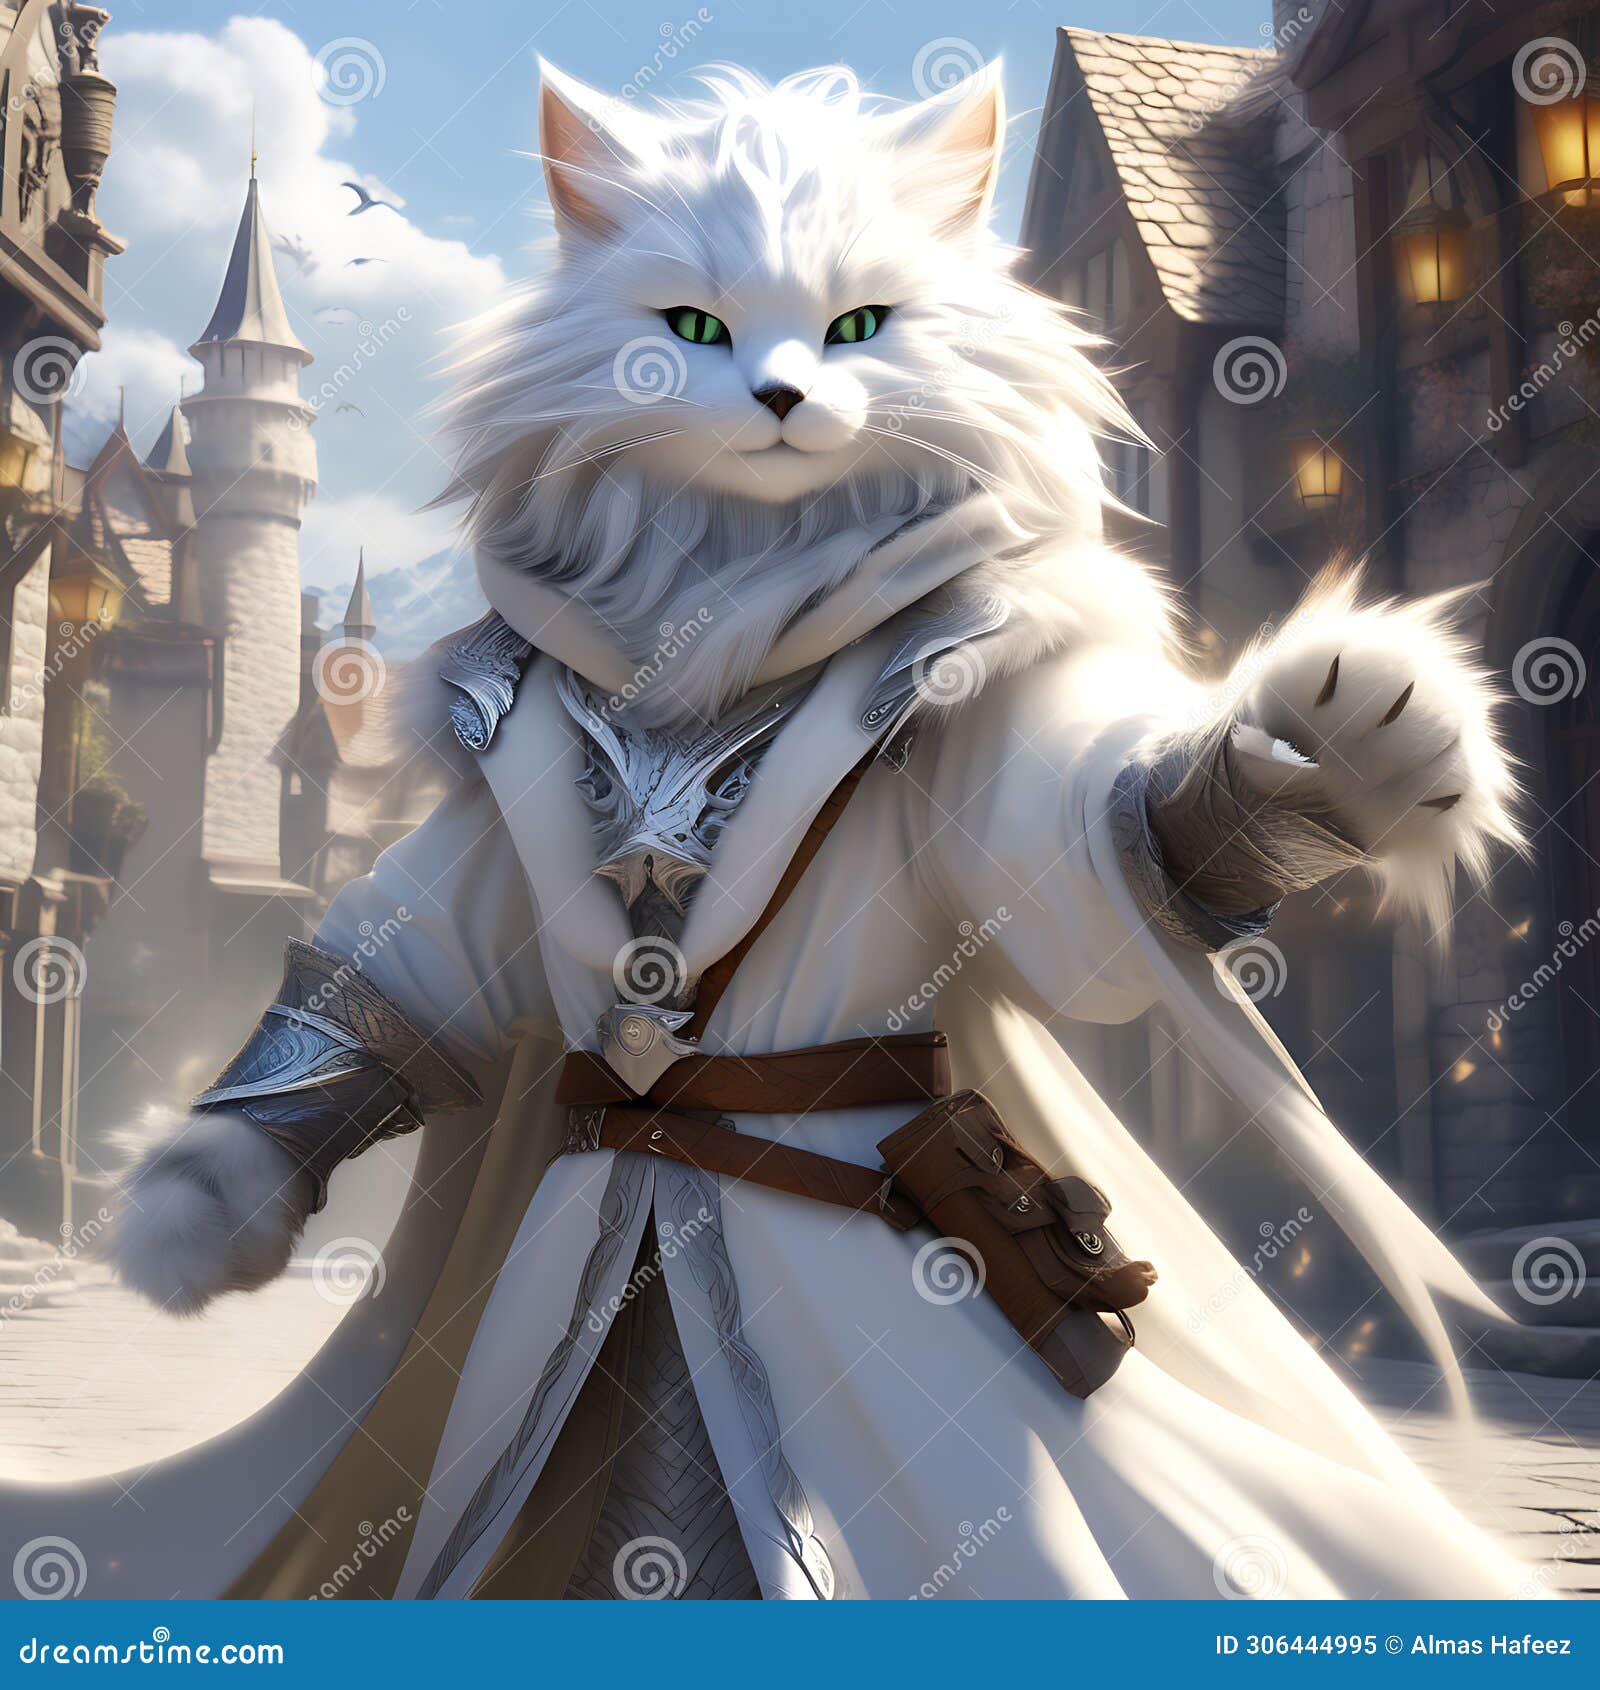 furry humanoid cat sorcerer in traveler's garb, embracing fantasy ambience